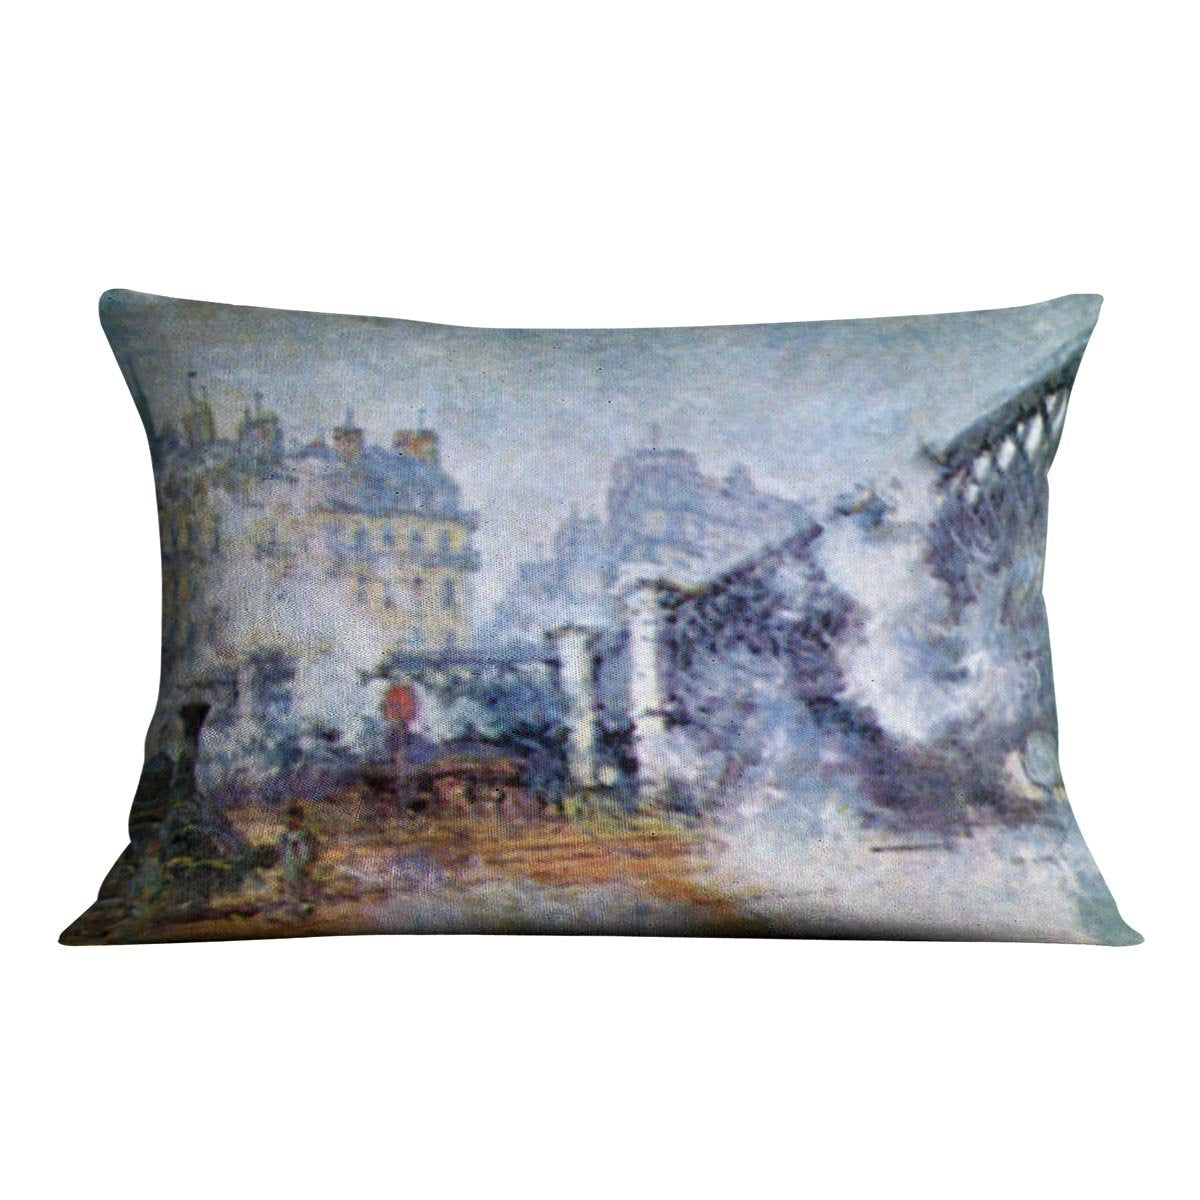 The Europe Bridge Saint Lazare station in Paris by Monet Throw Pillow